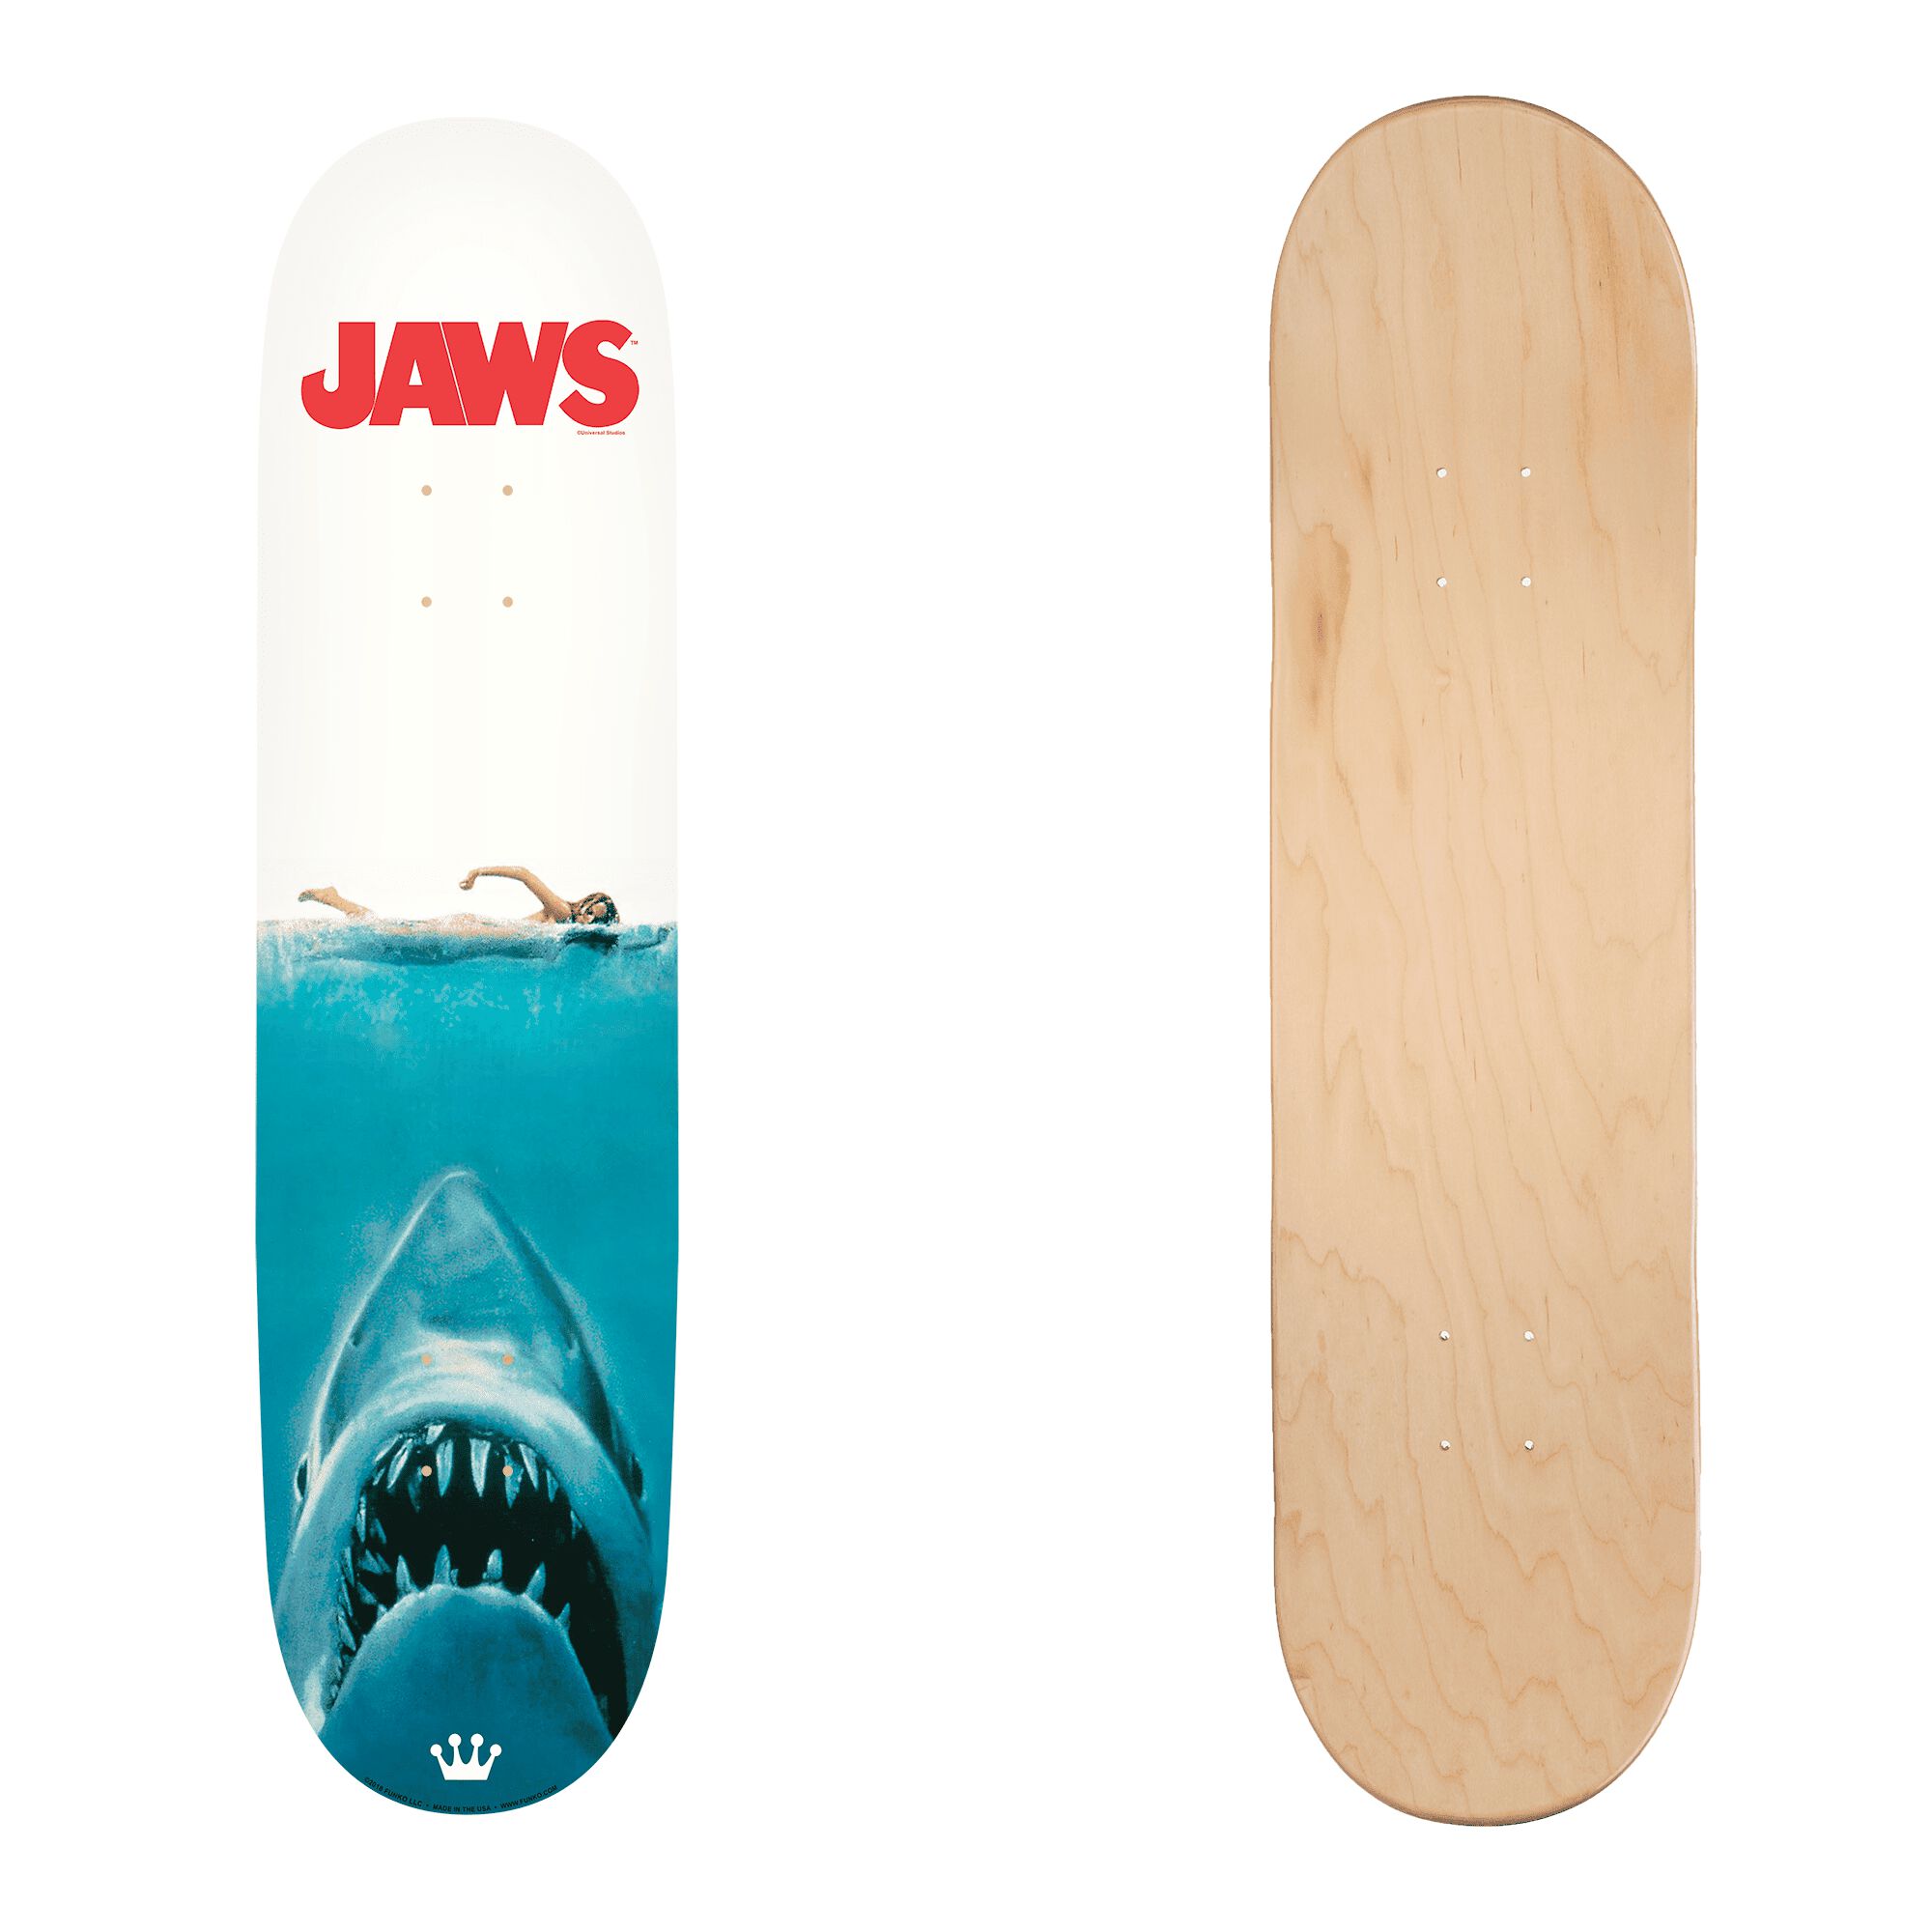 Coming Soon: Jaws Skateboard Deck!